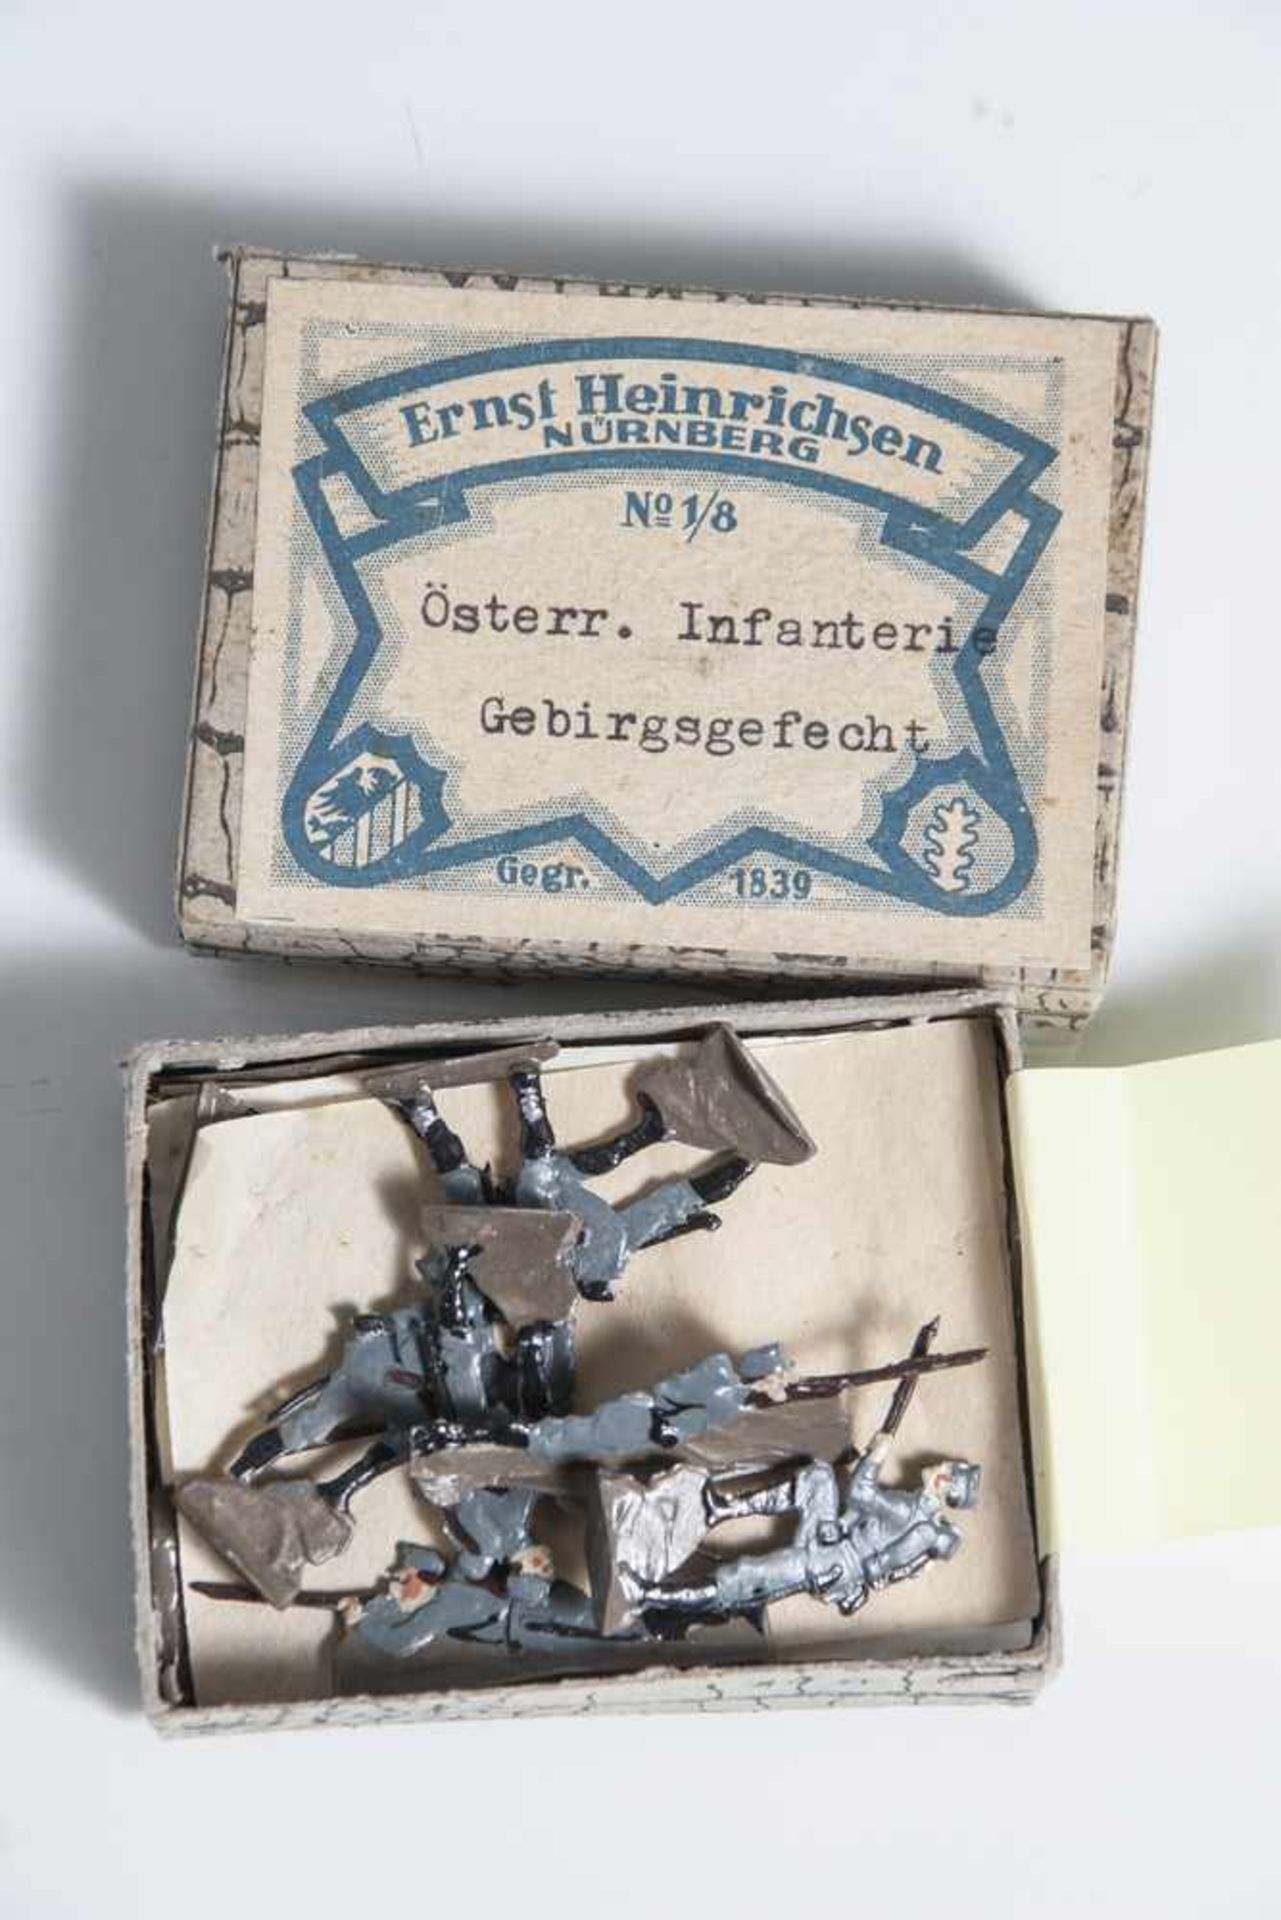 1 Schachtel Zinnfiguren, "Österr. Infanterie Gebirgsgefecht", Ernst Heinrichsen, Nürnberg, No. 1/